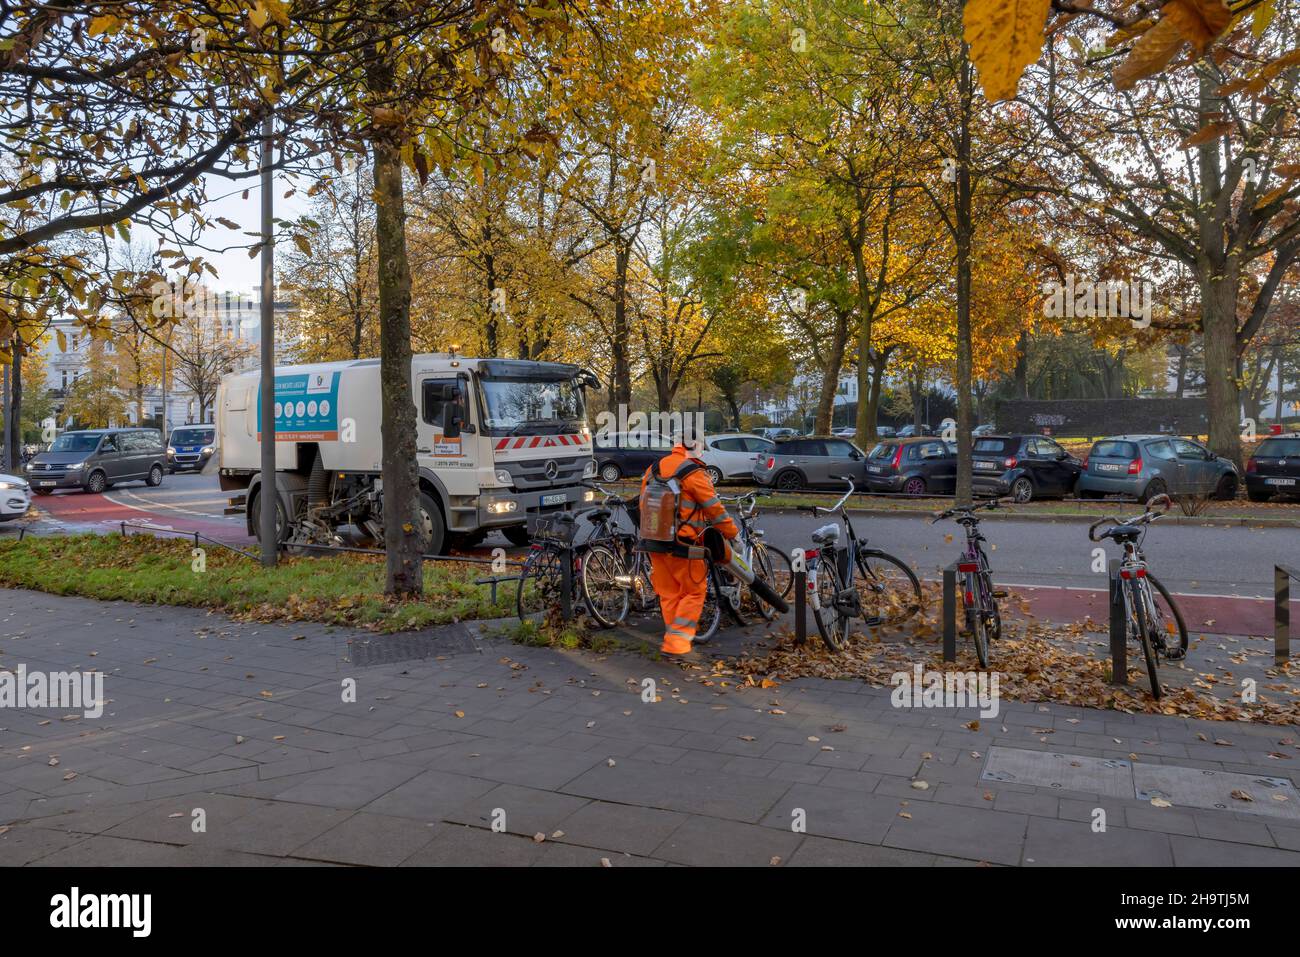 leaf blower on work, Germany Stock Photo